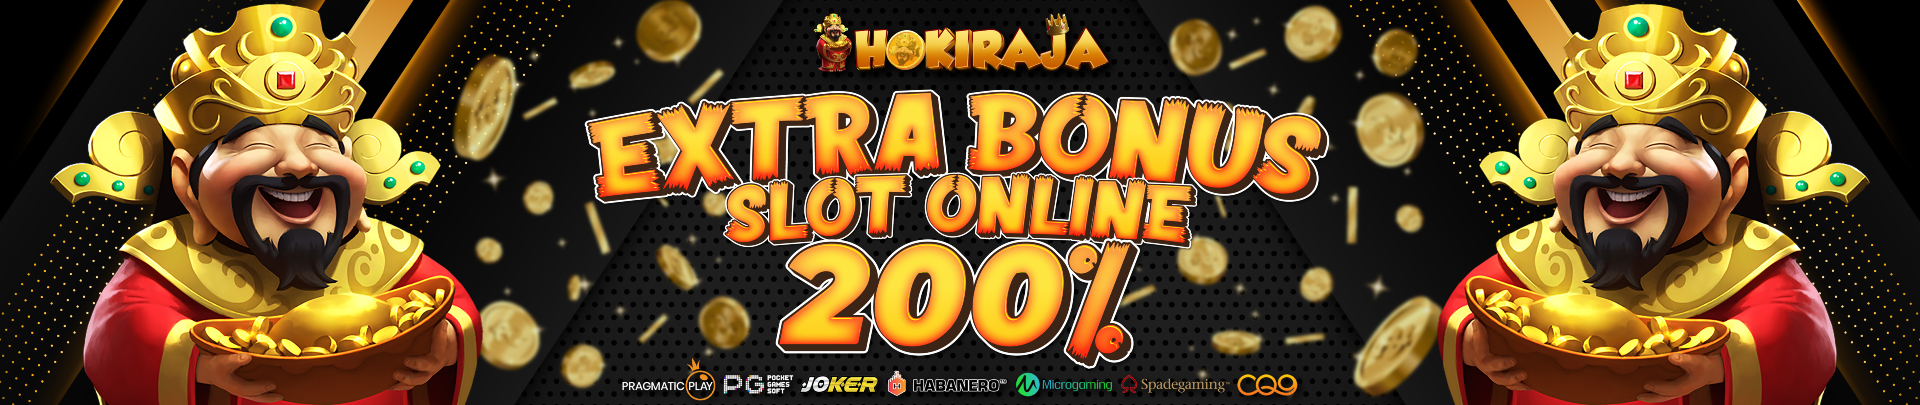 Extra Bonus Slot Online